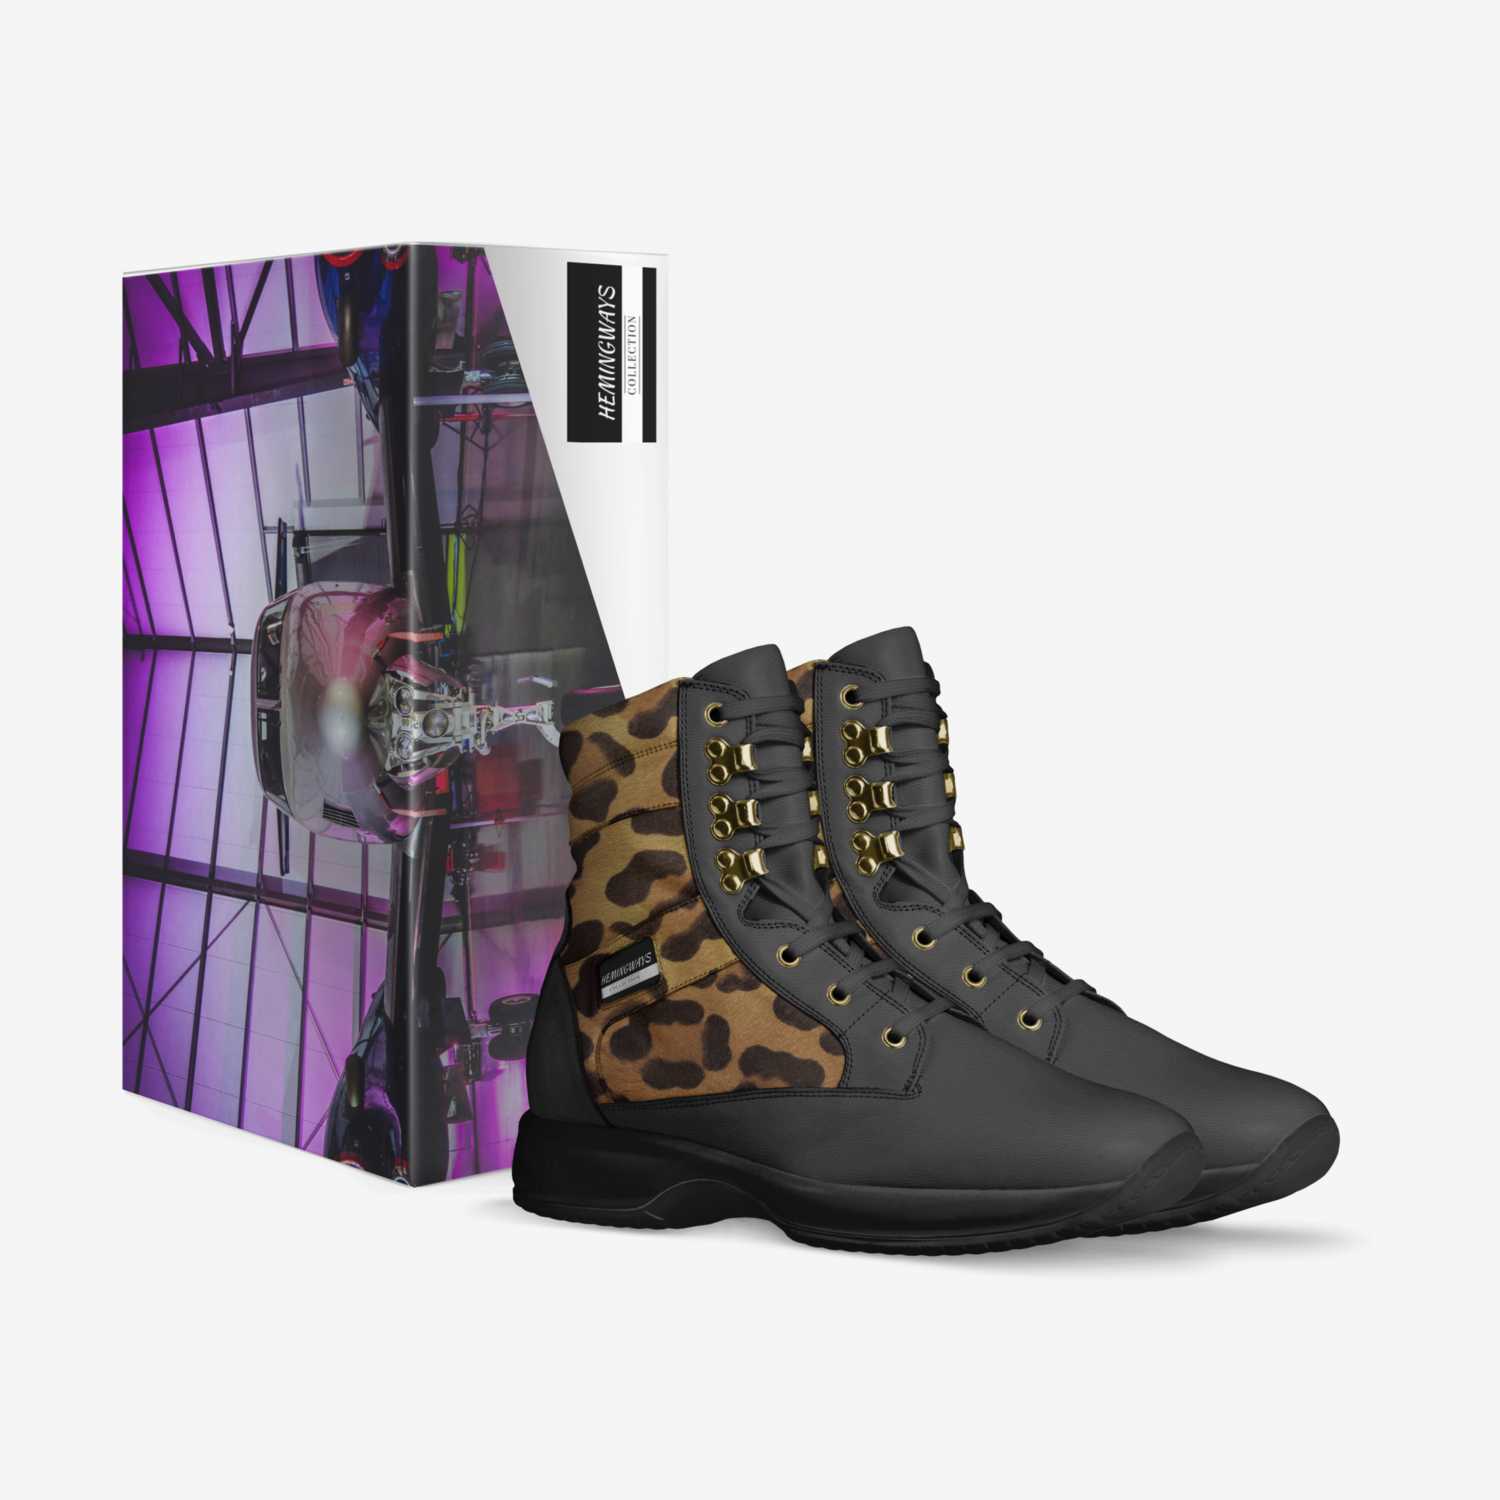 HEMINGWAYS custom made in Italy shoes by Cortez Hemingway | Box view